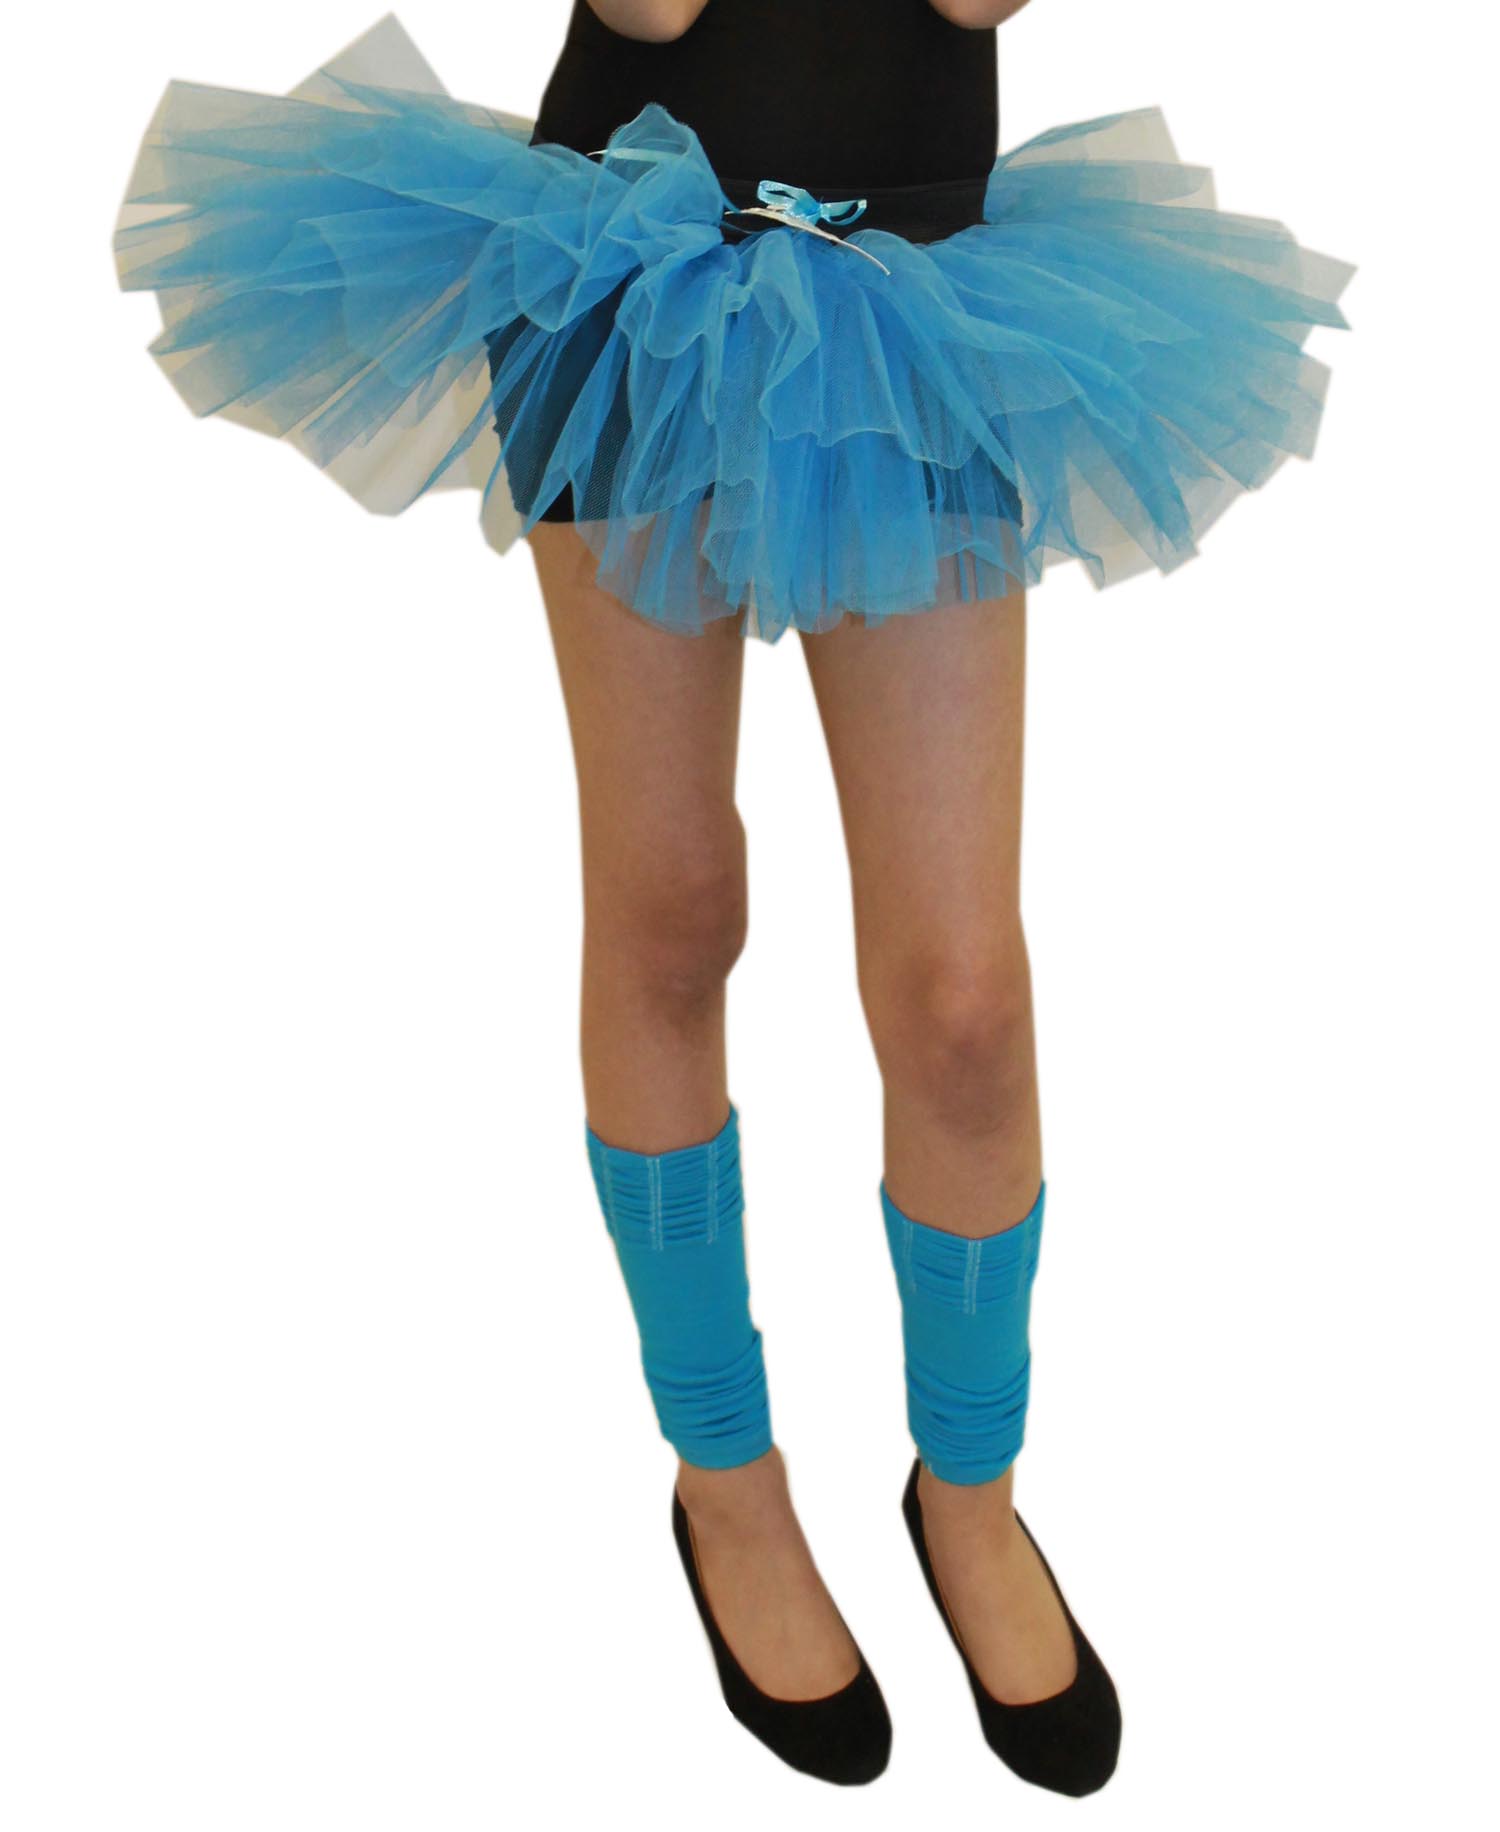 Crazy Chick Girls 3 Layers Turquoise Tutu Skirt